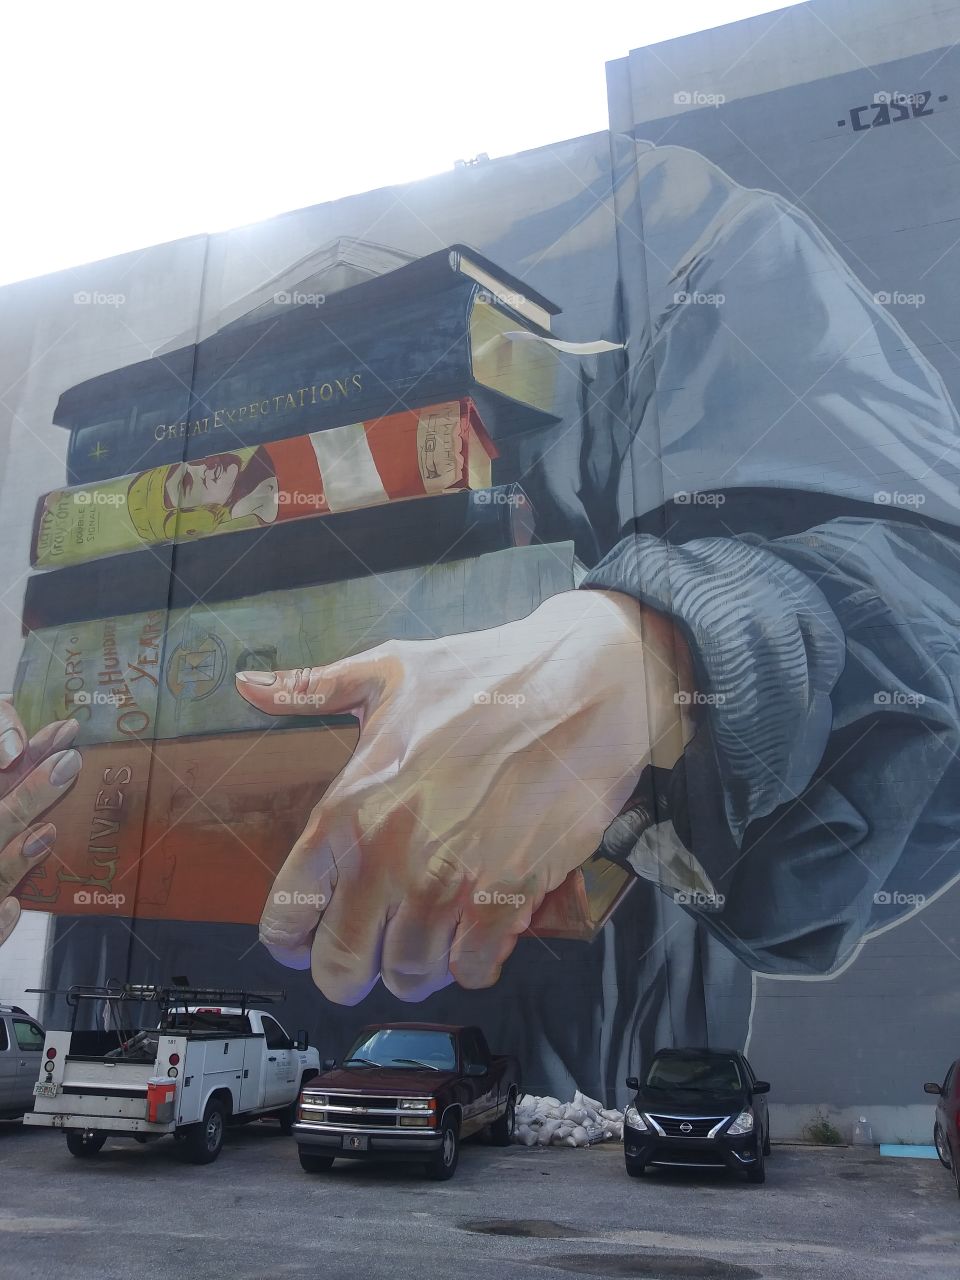 Huge Mural on Building Downtown Jacksonville Fl. Morning.